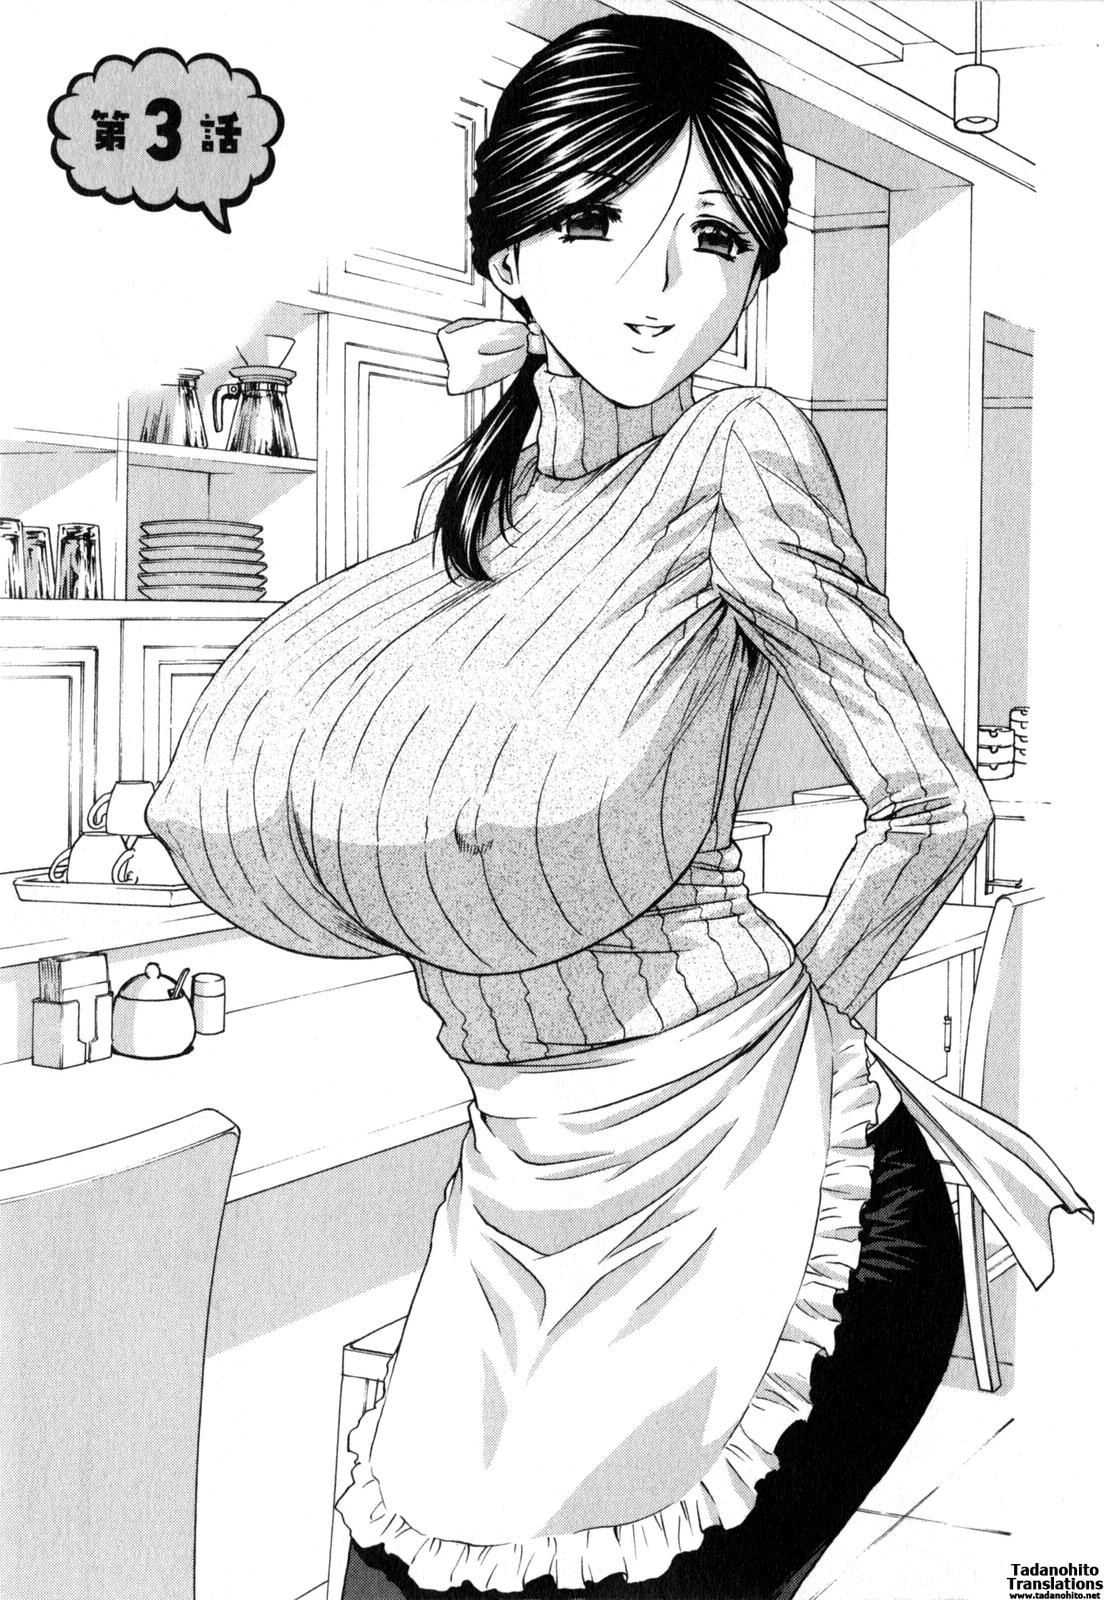 [Hidemaru] Life with Married Women Just Like a Manga 2 - Ch. 1-8 [English] {Tadanohito} 46